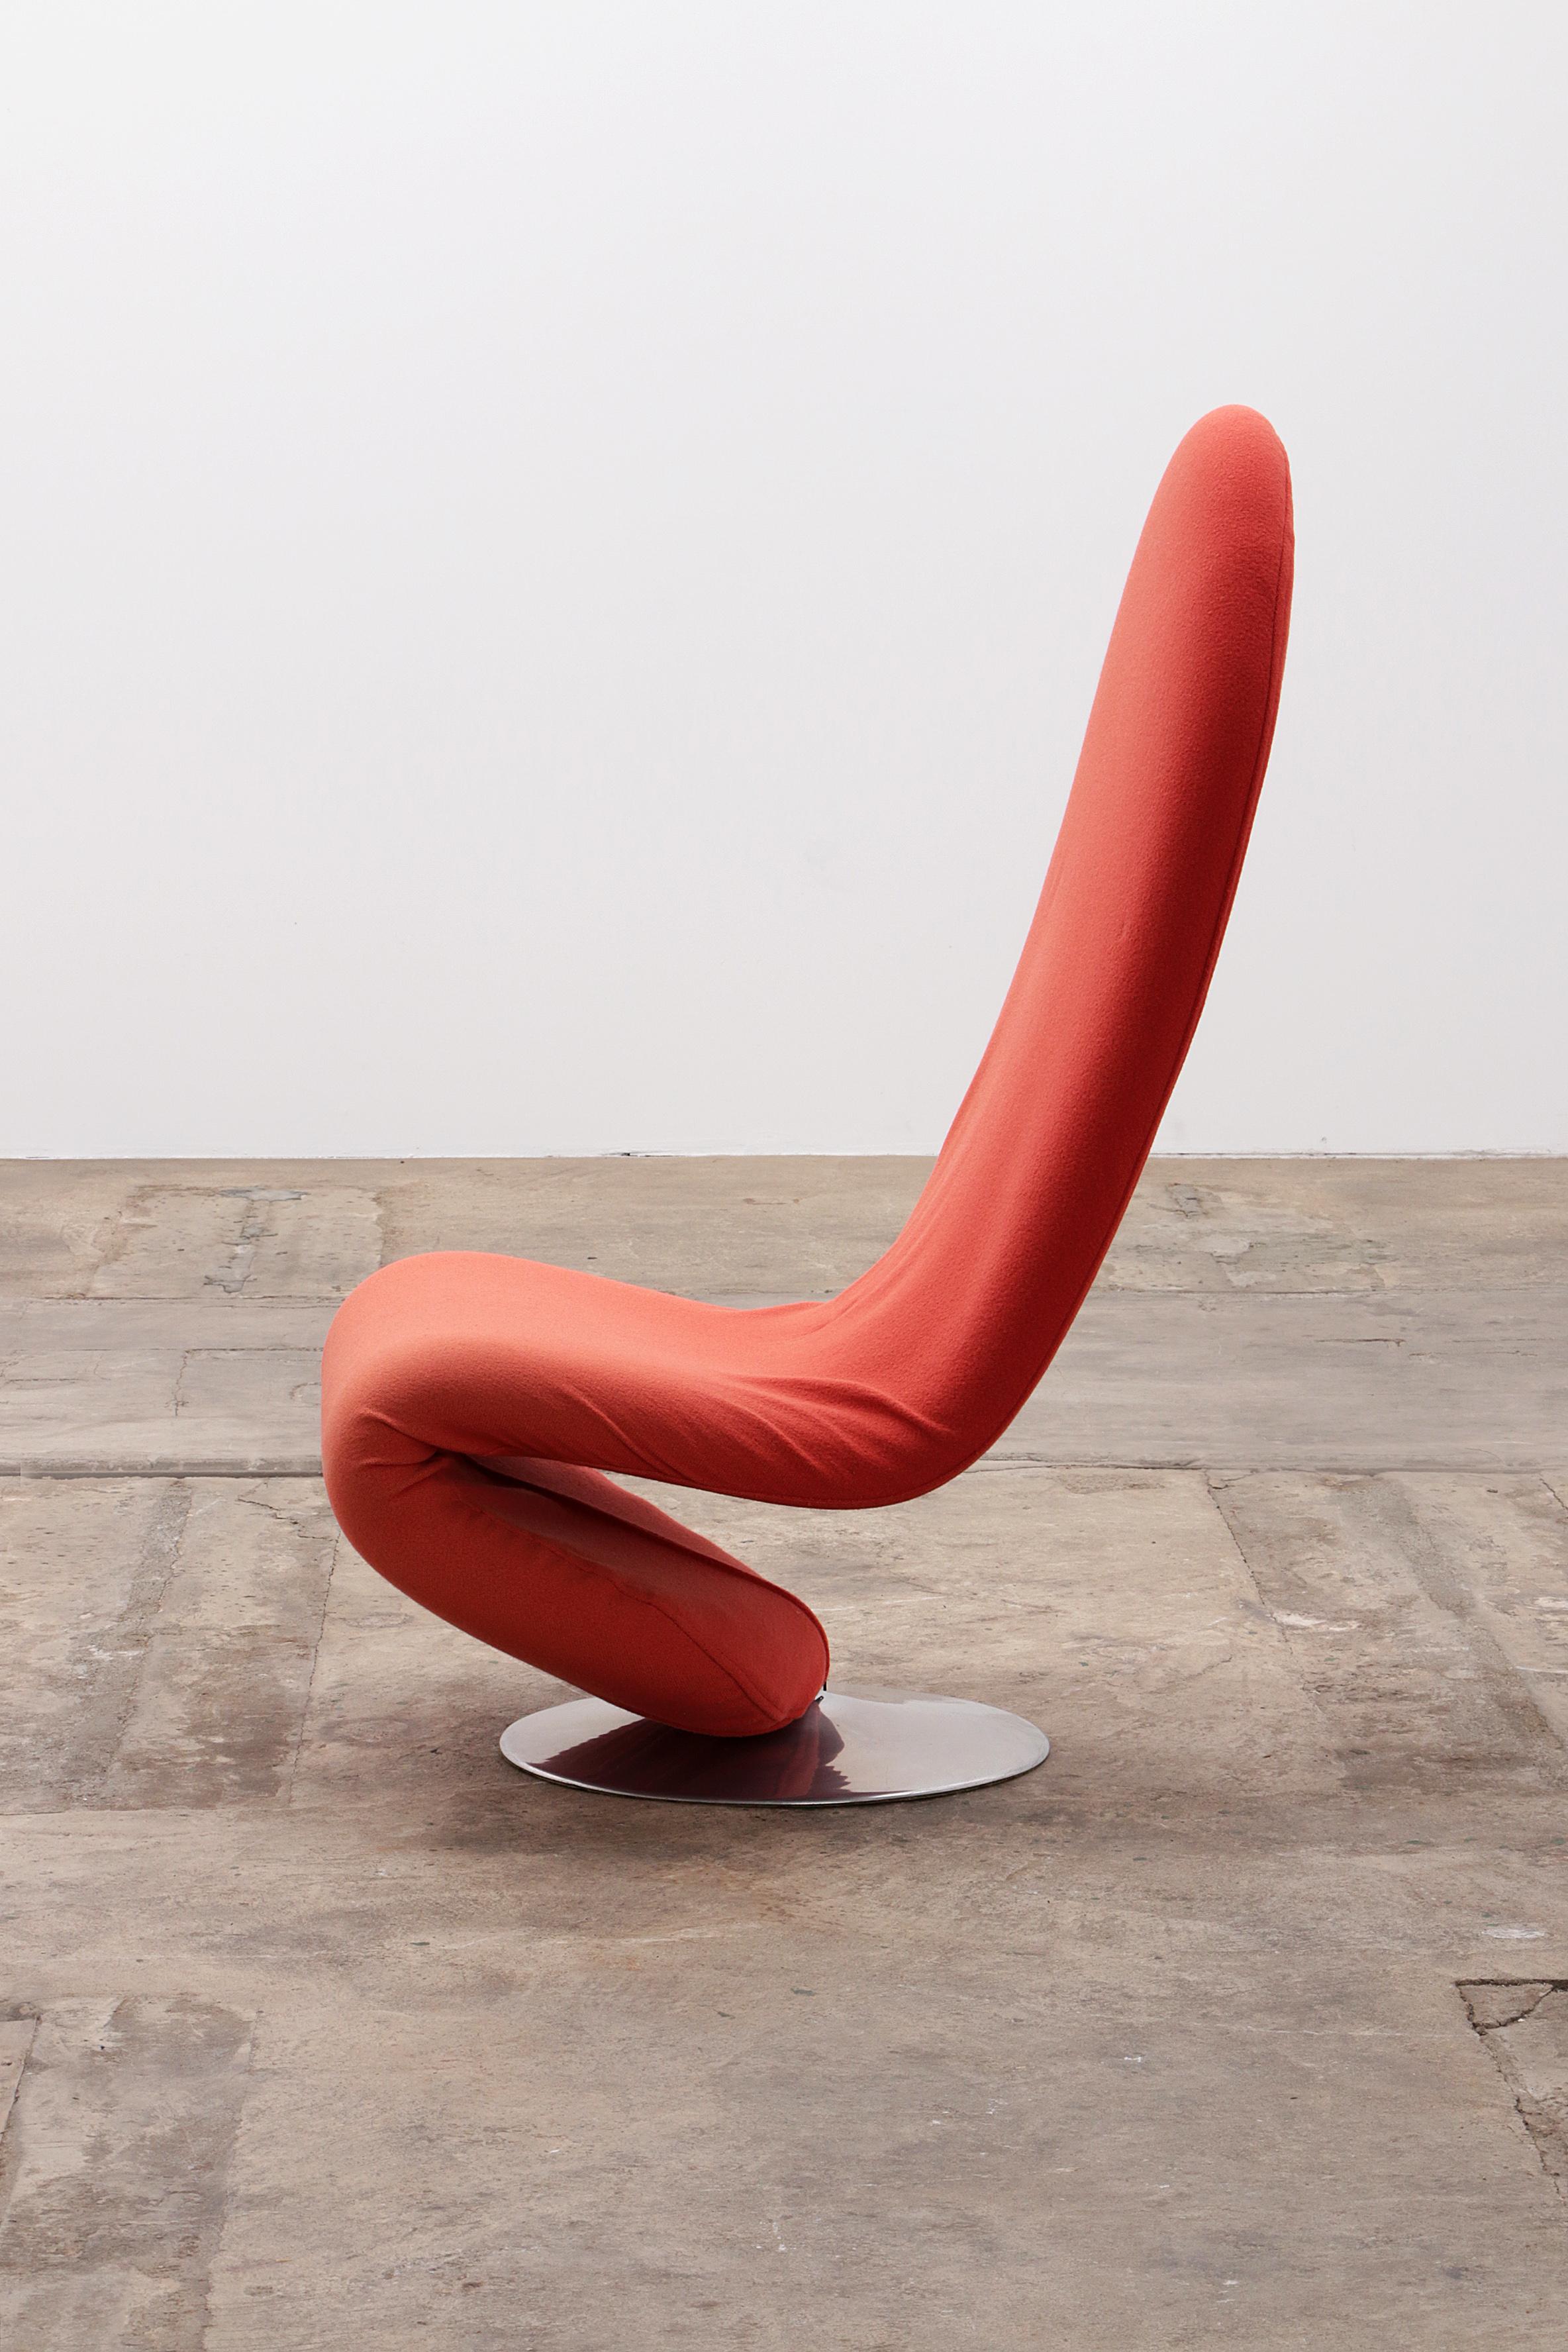 Danish Verner Panton 1-2-3 Chair with High Backrest - Red/Orange, 1973 For Sale